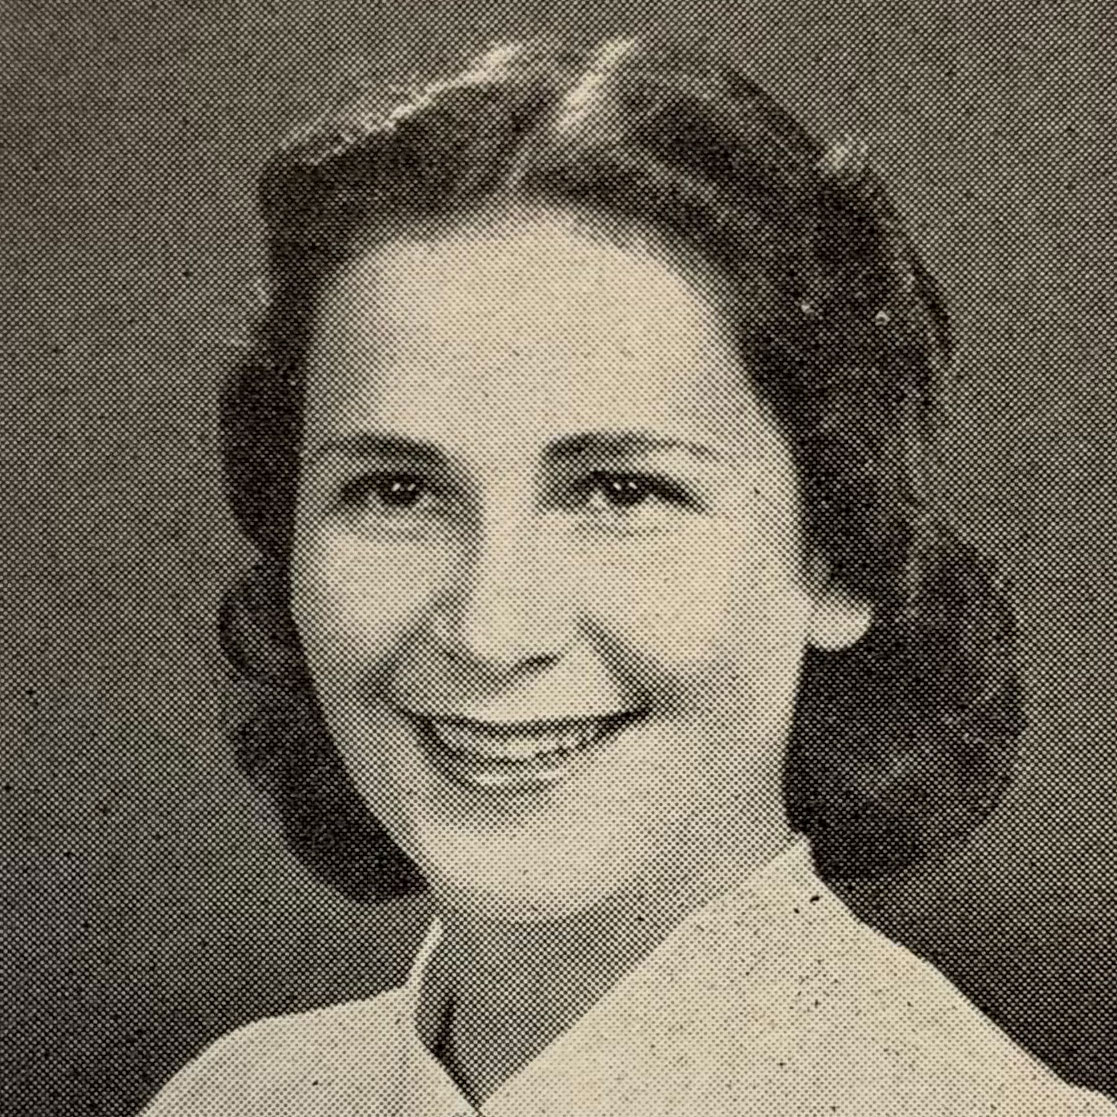 Cornell legacy: Clara Haverstic '23 - Cornell College